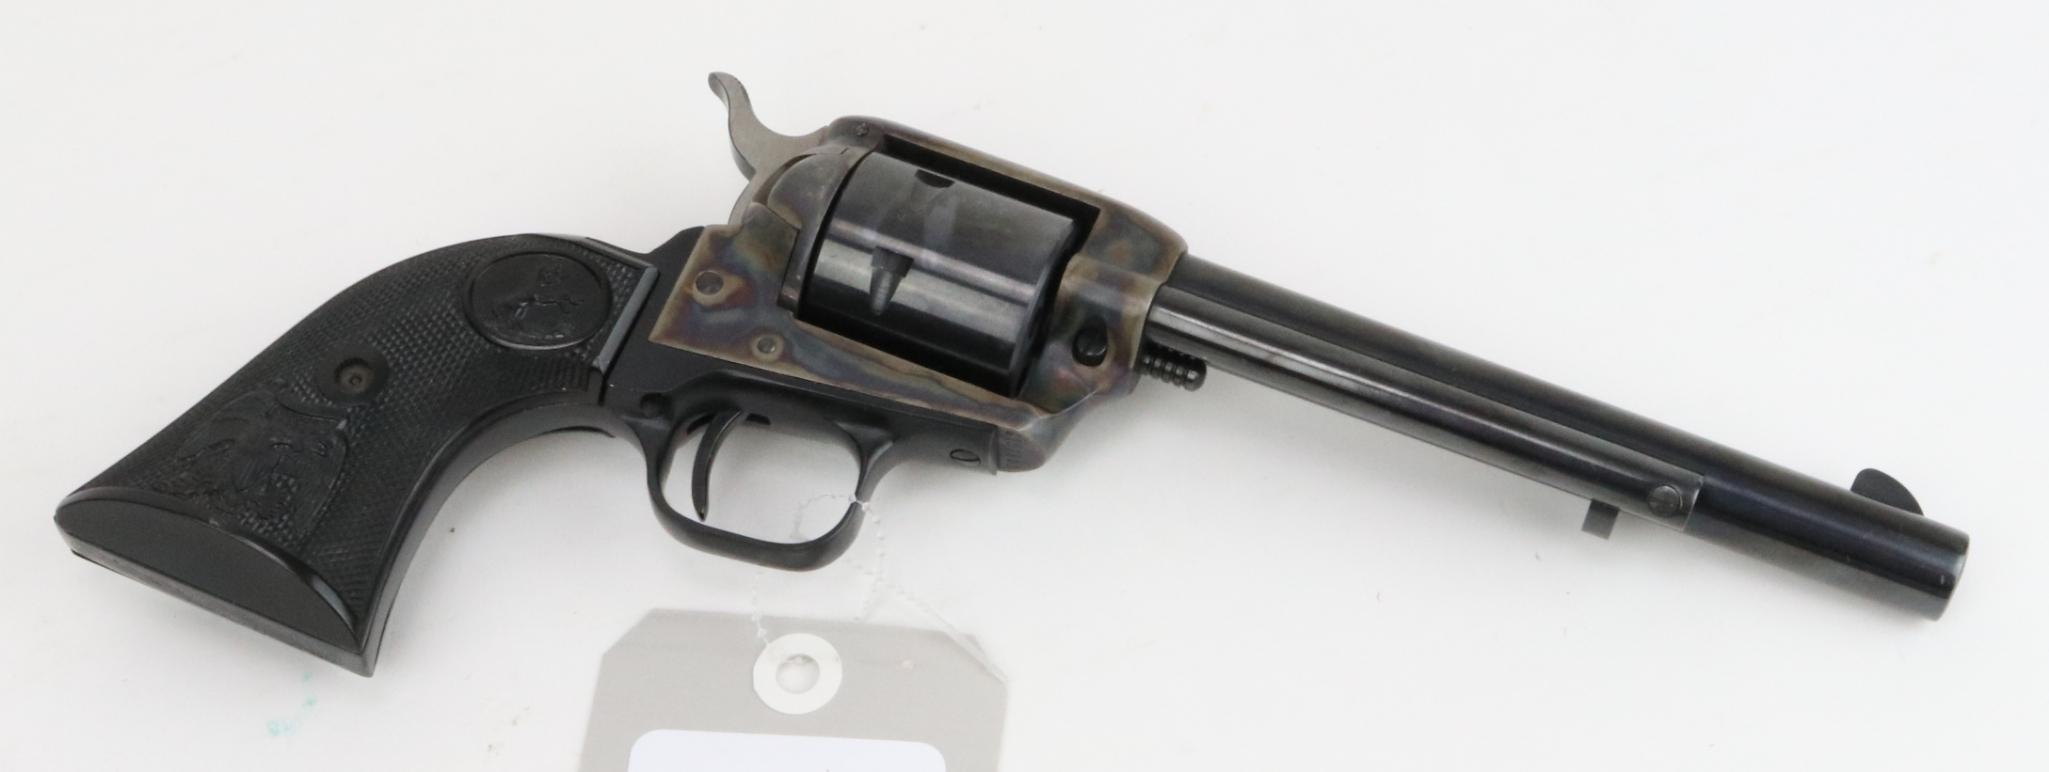 Colt Peacemaker 22 single action revolver.